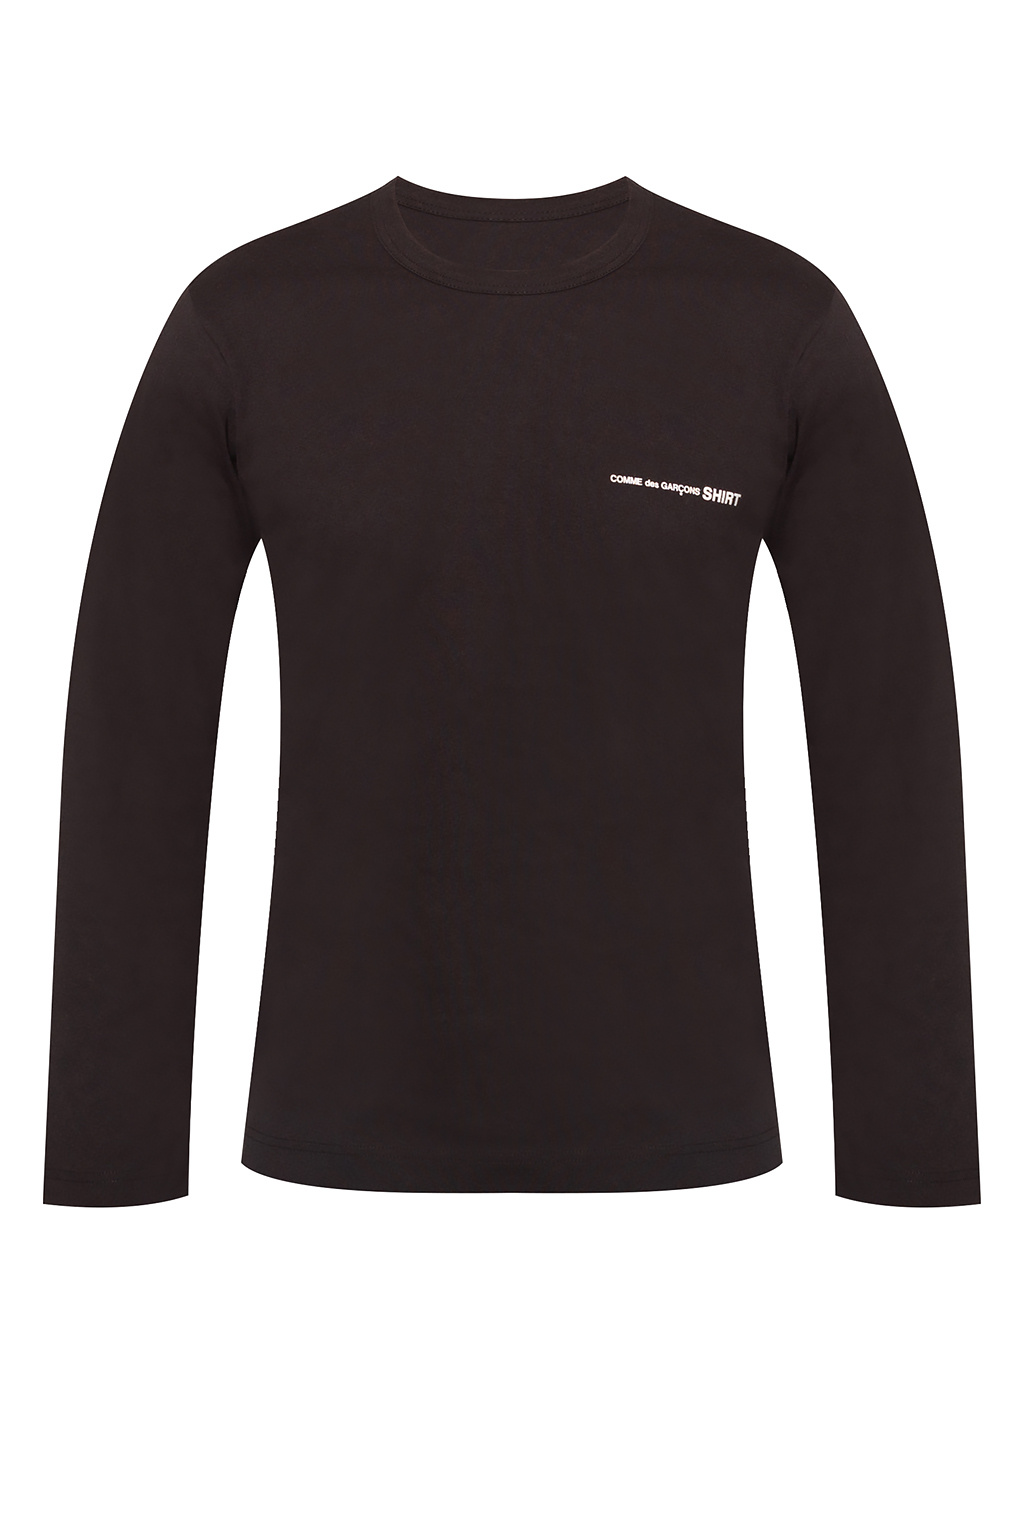 Nike Jordan Jumpman Classics hoodie in black Long-sleeved T-shirt